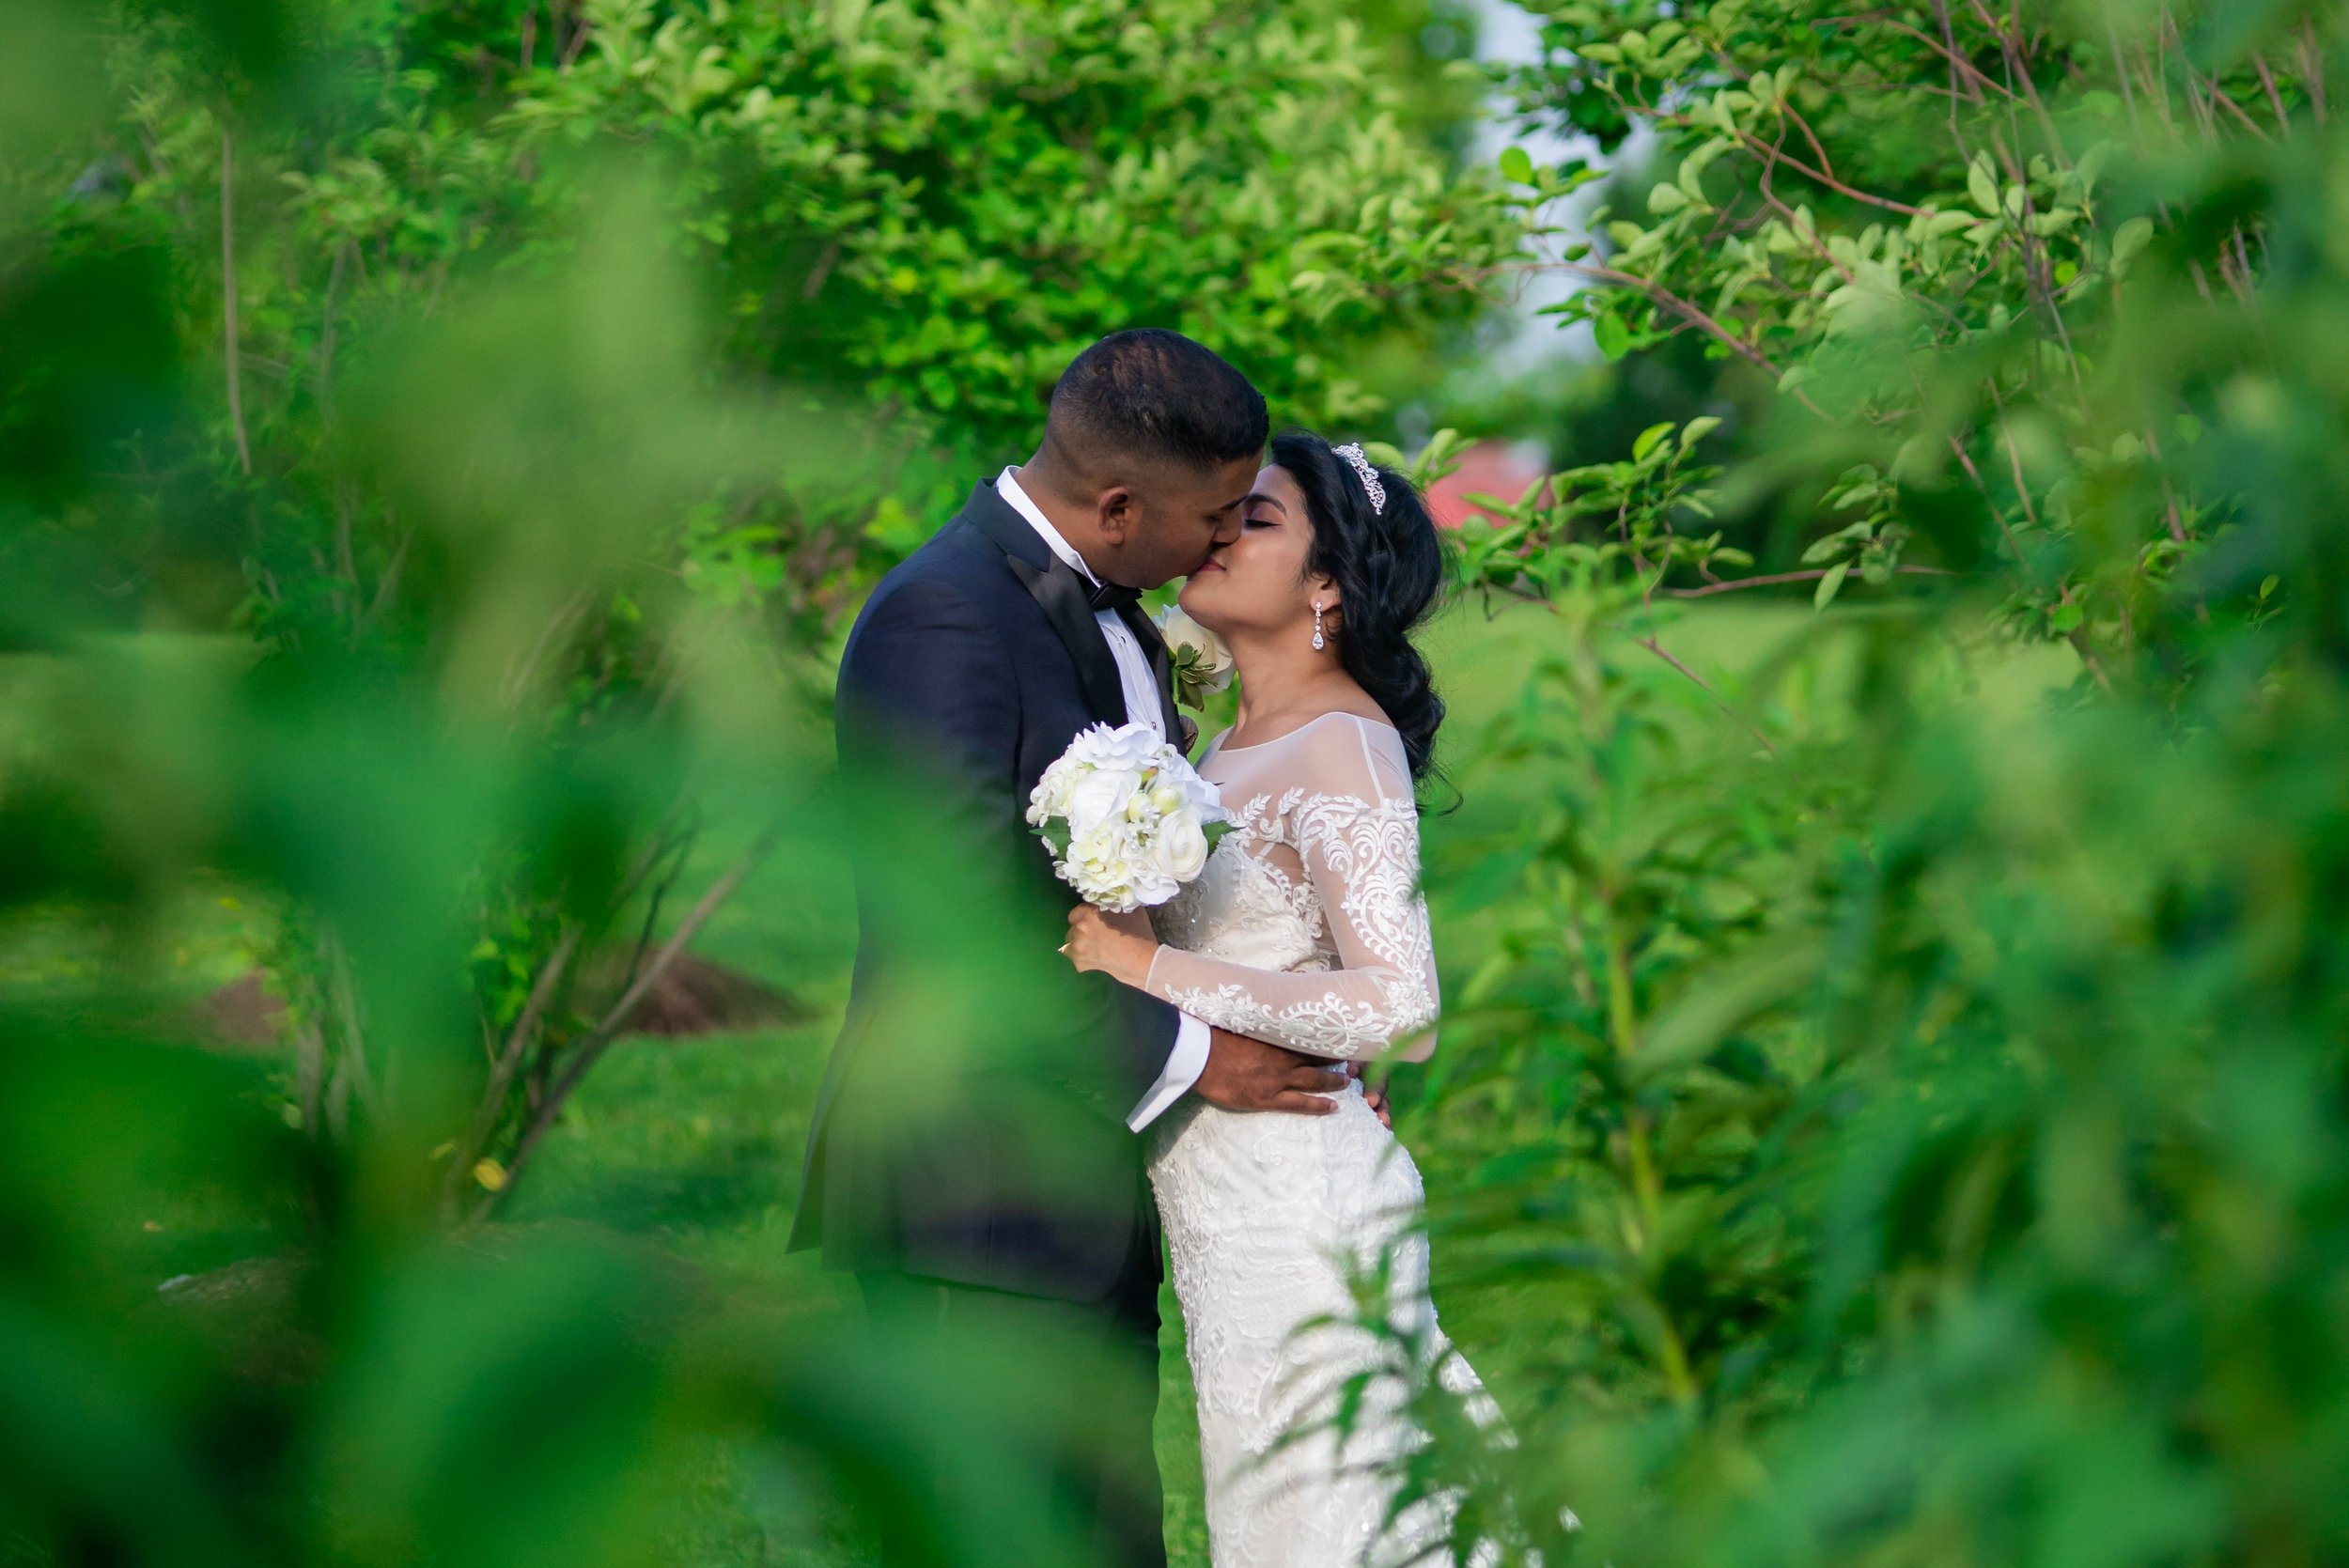 Unveiled Weddings NYC Photography & Videography Studio